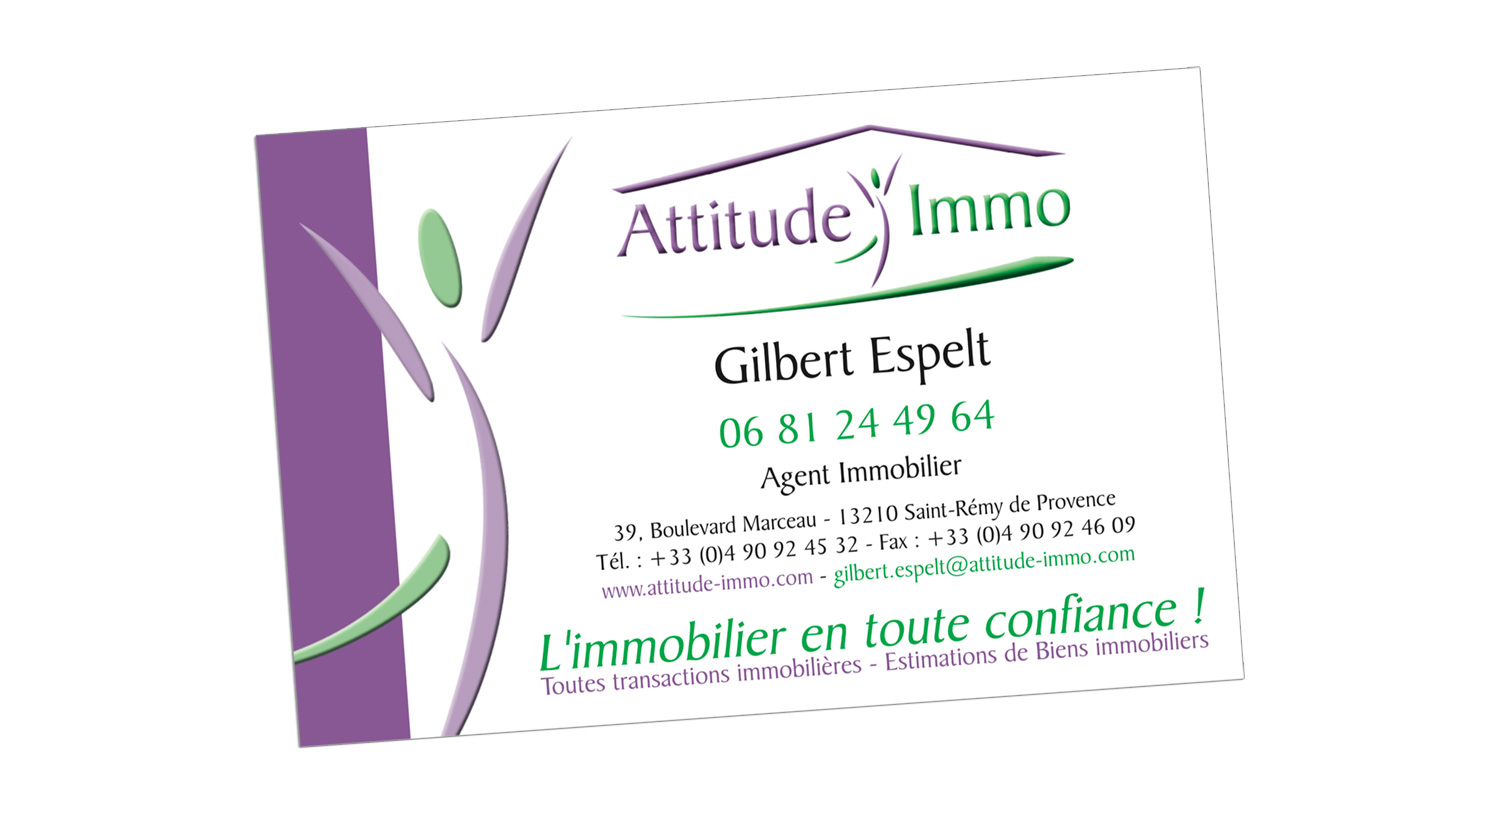 Cartes de visite Attitude Immo - Saint-Rémy de Provence